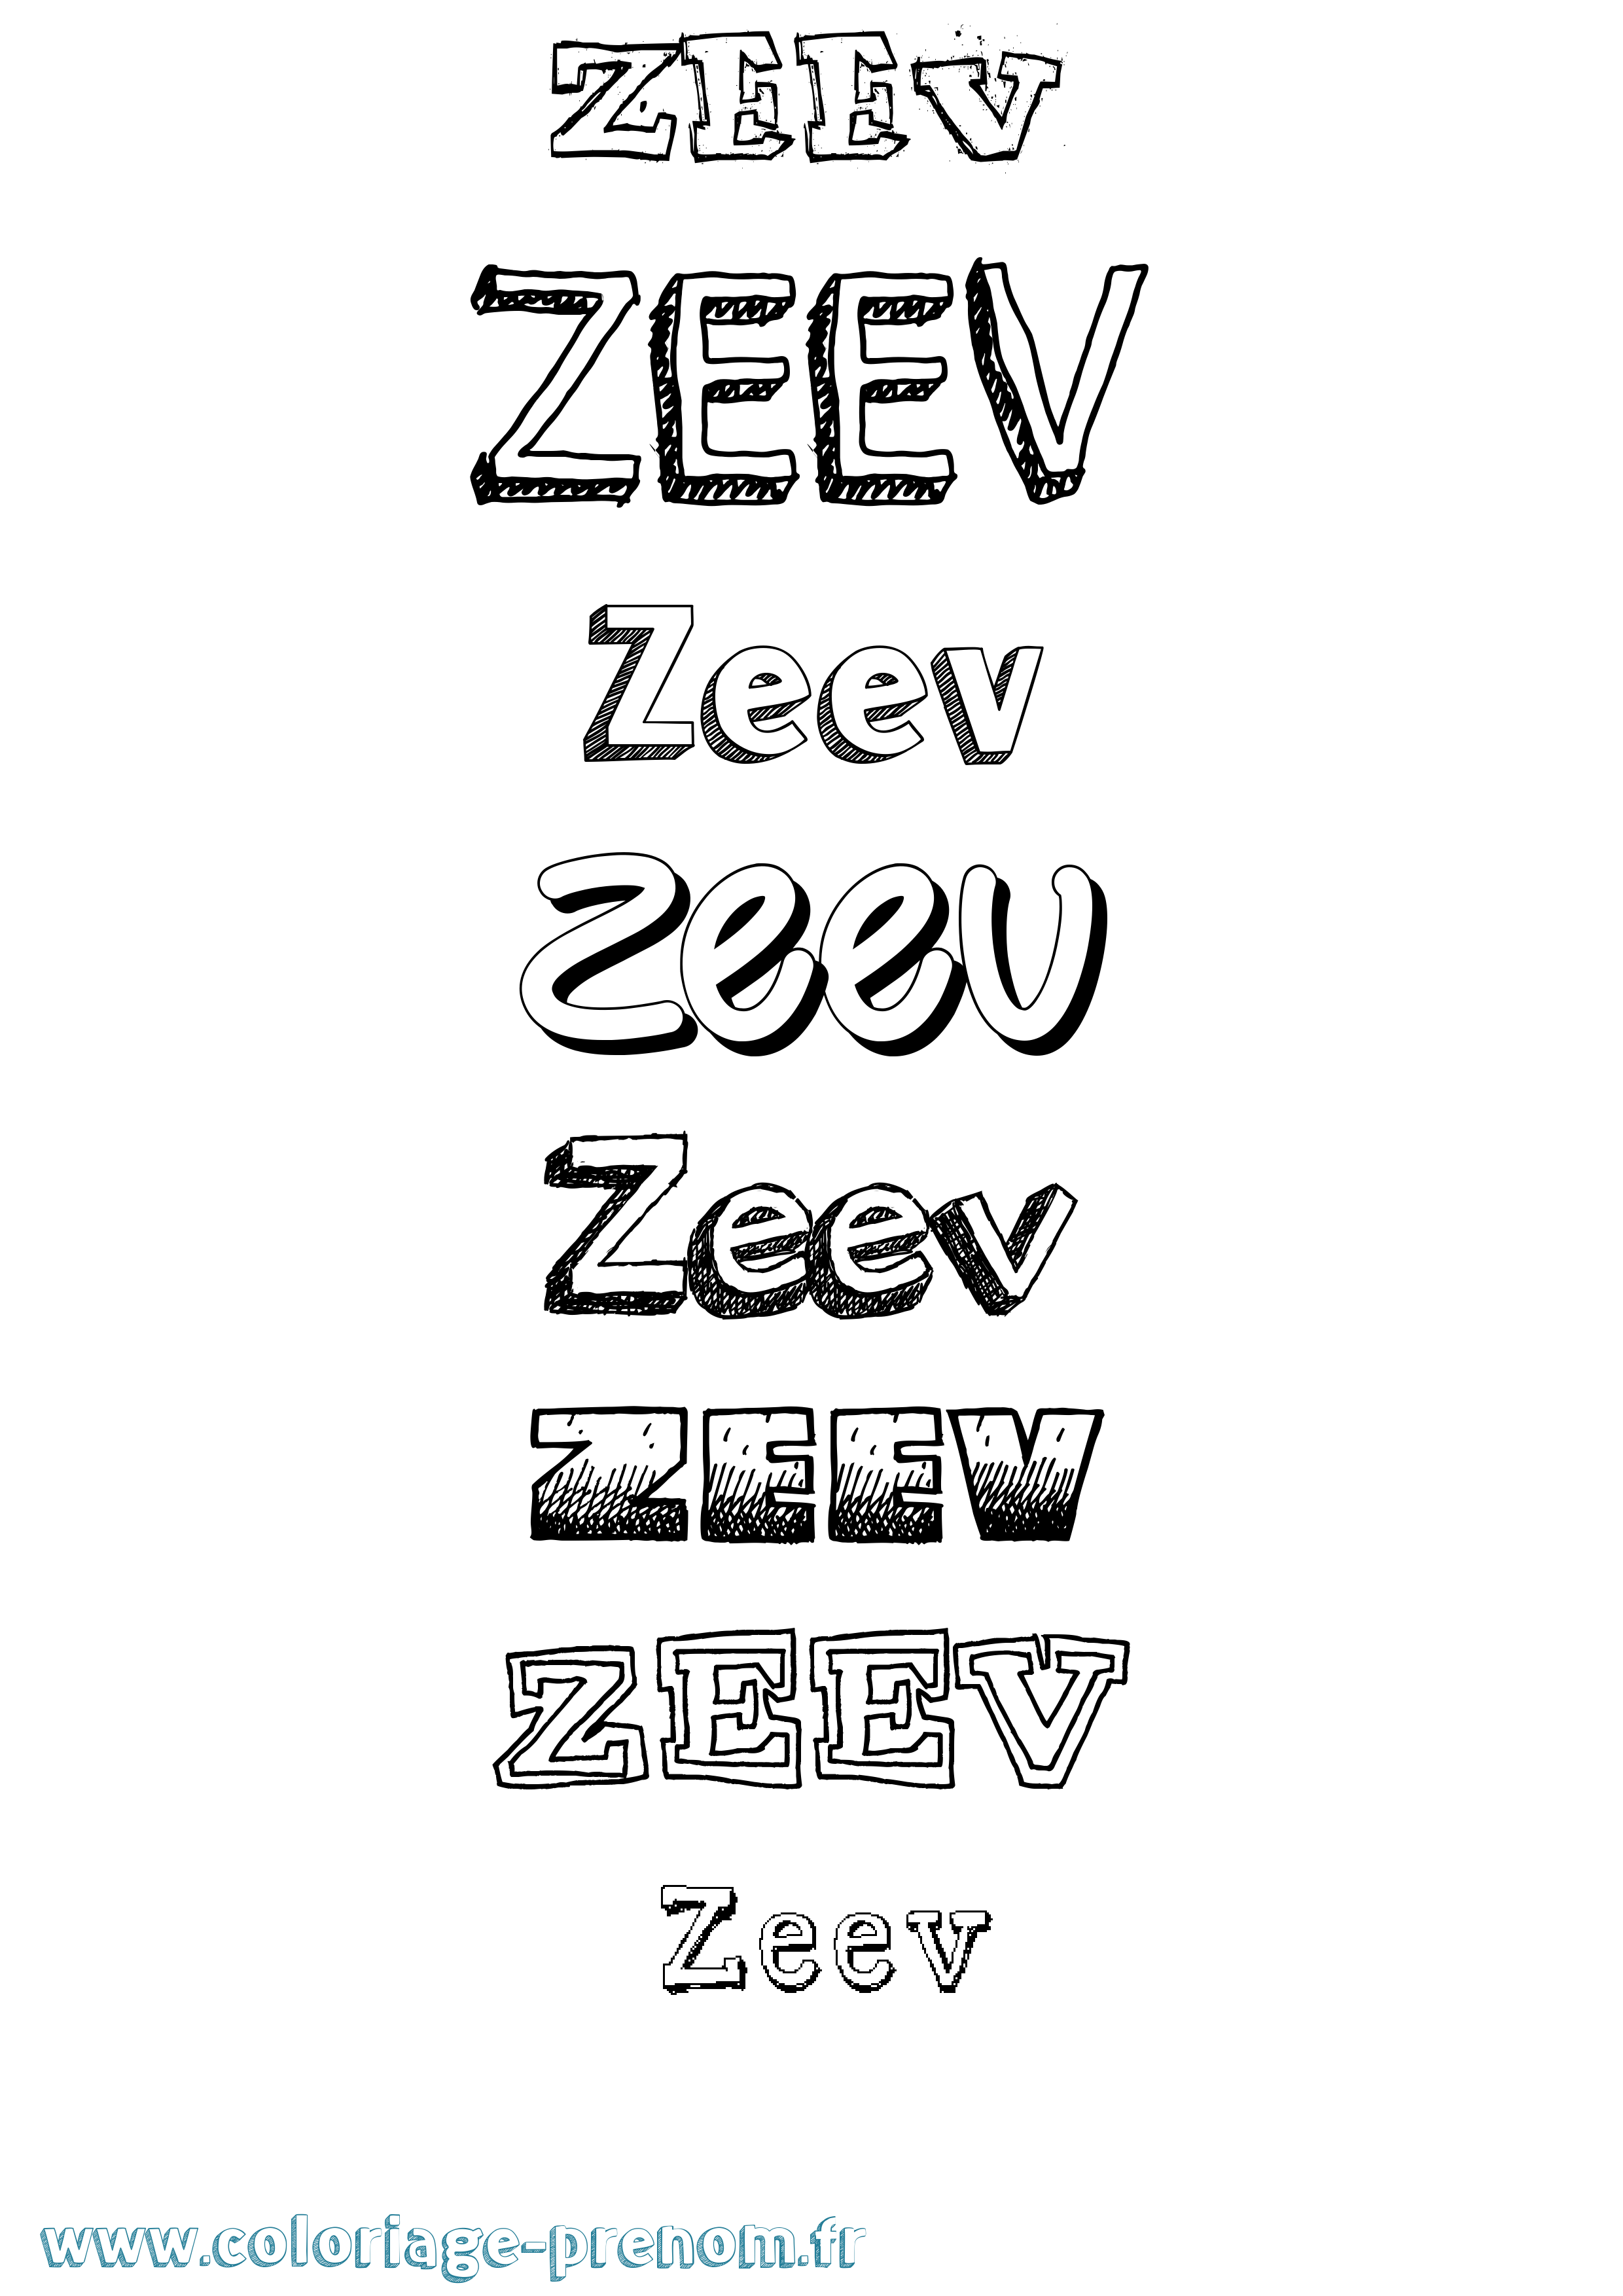 Coloriage prénom Zeev Dessiné